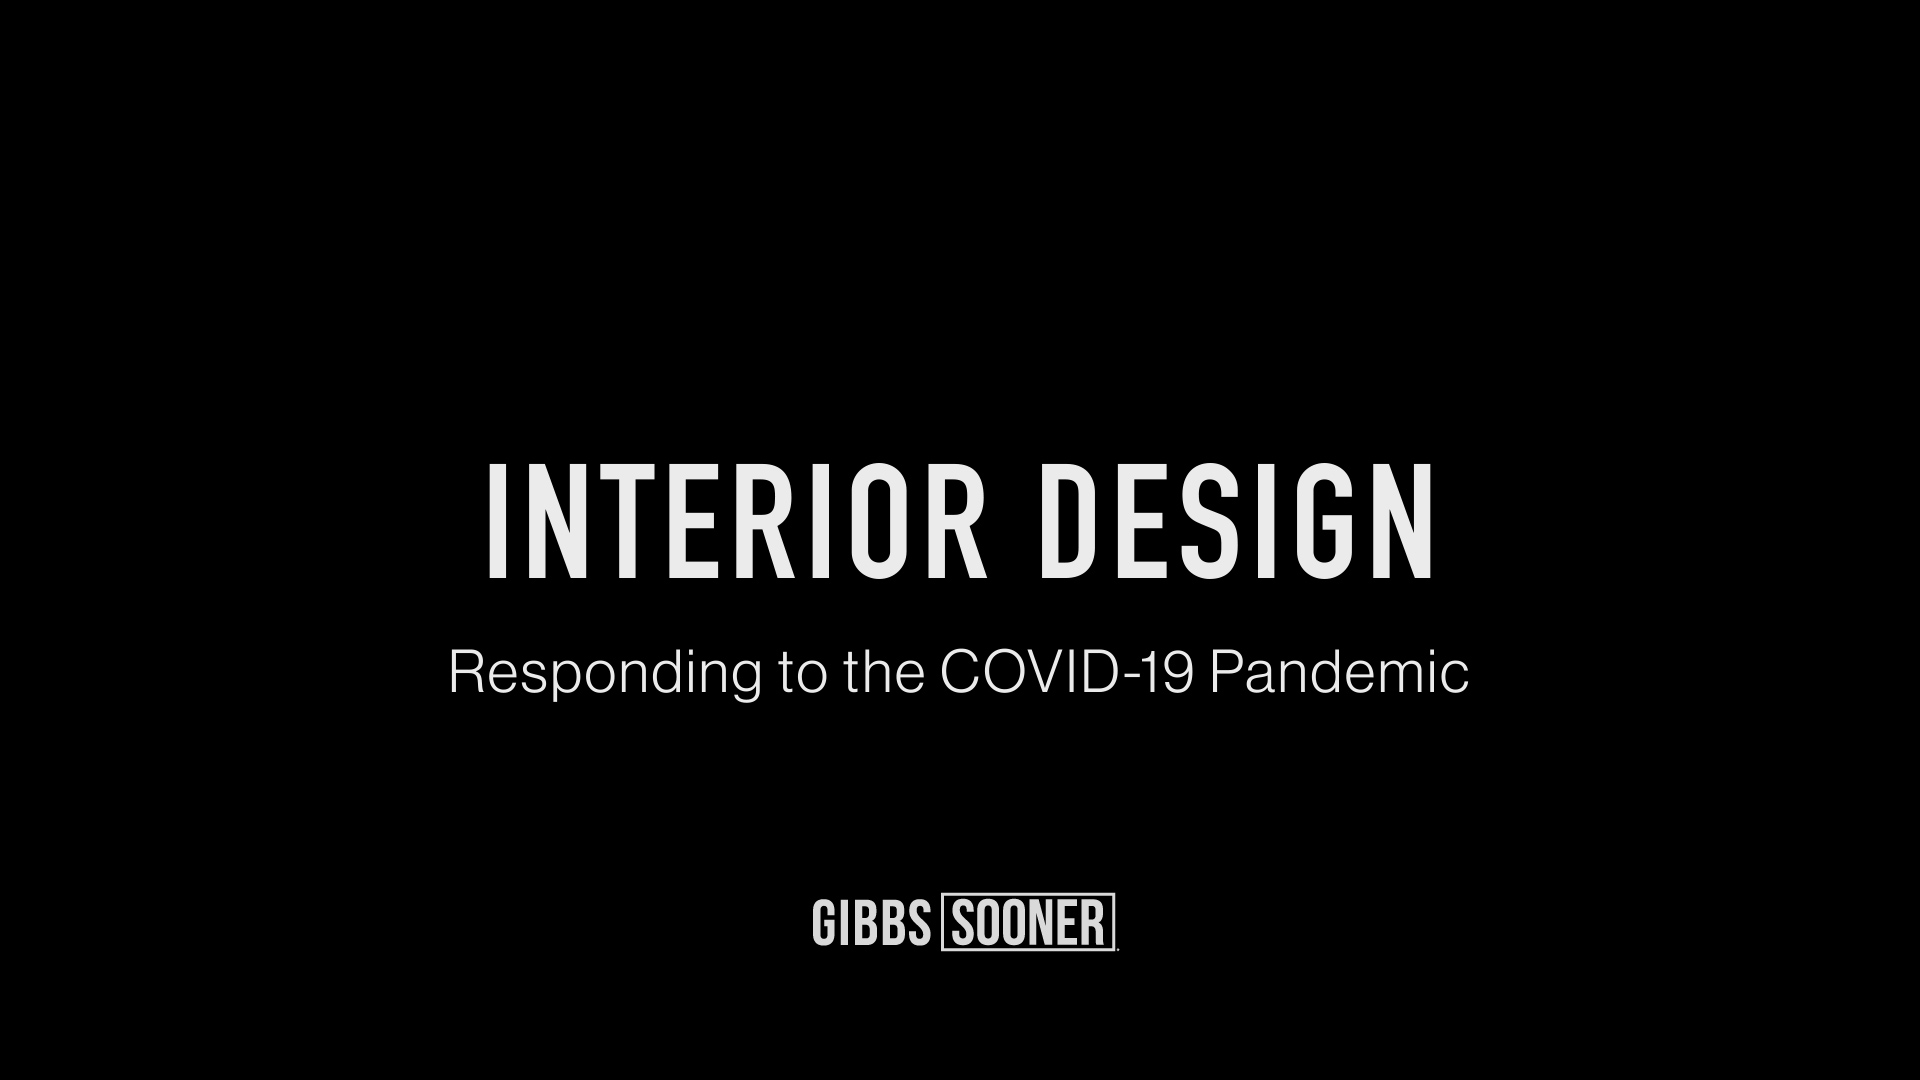 Director of Interior Design Elizabeth Pober Discusses Program’s Response to the COVID-19 Pandemic